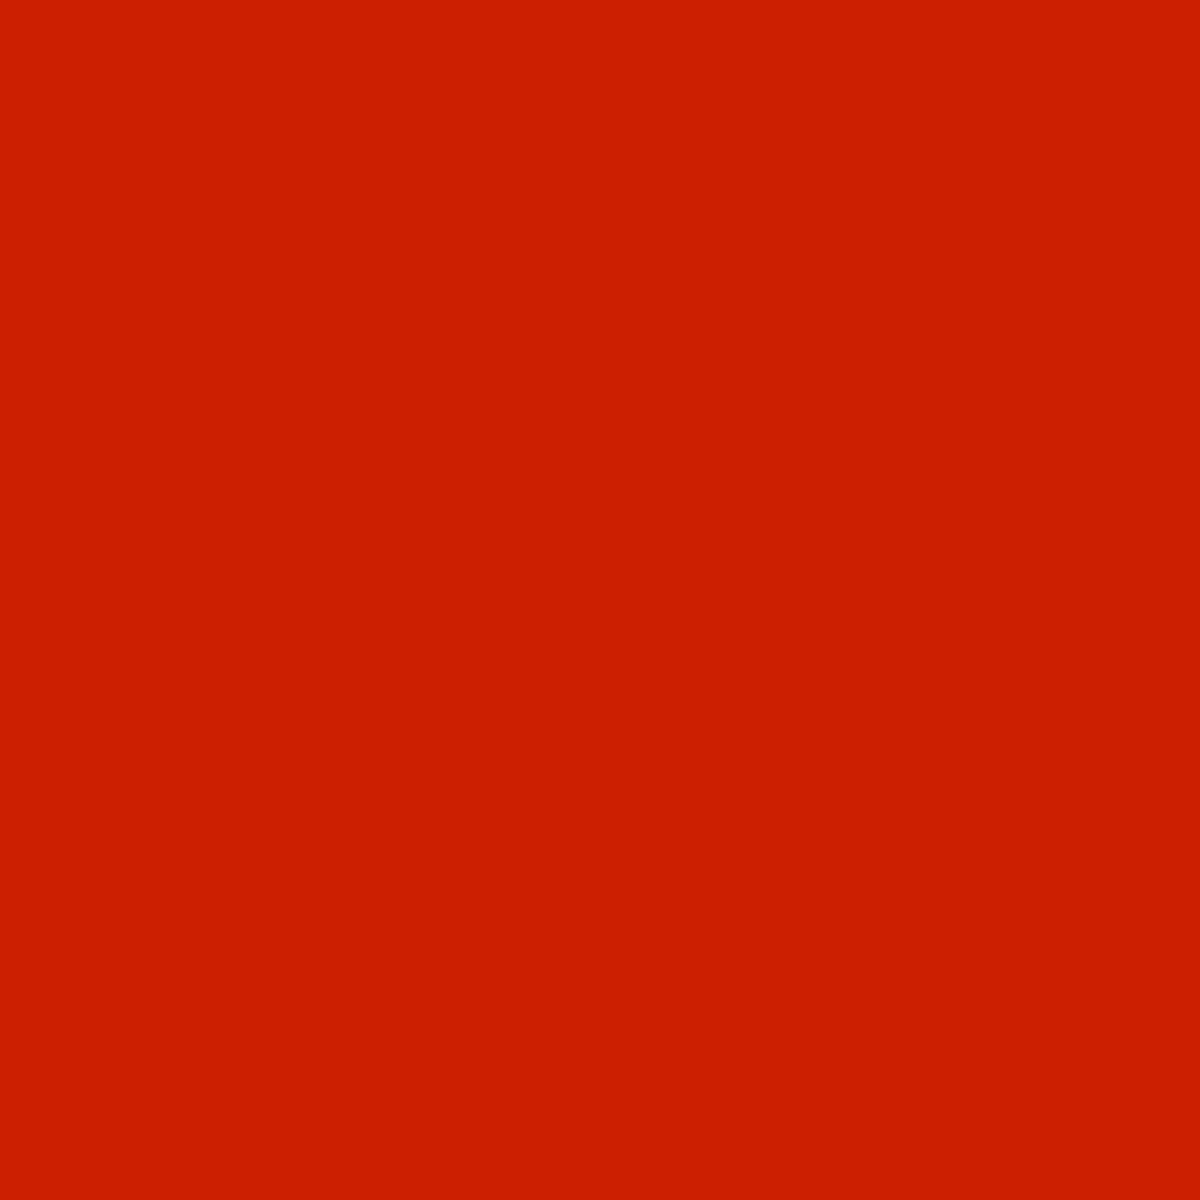 3M Scotchcal kleurenfolie 50-42 rood-oranje 1,22m x 50m